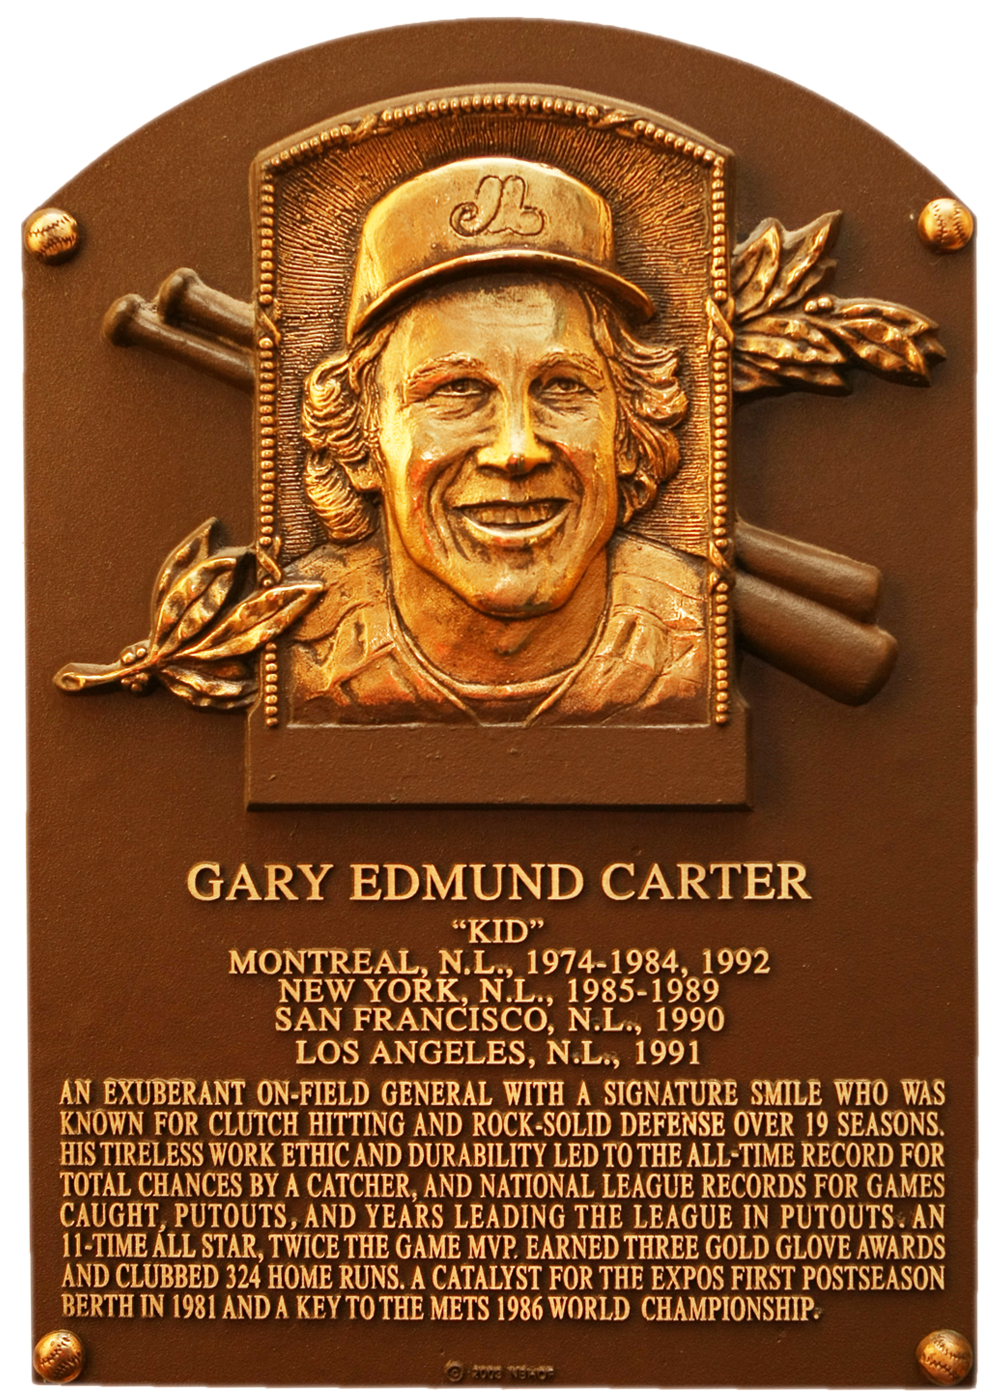 Gary Carter Hall of Fame plaque